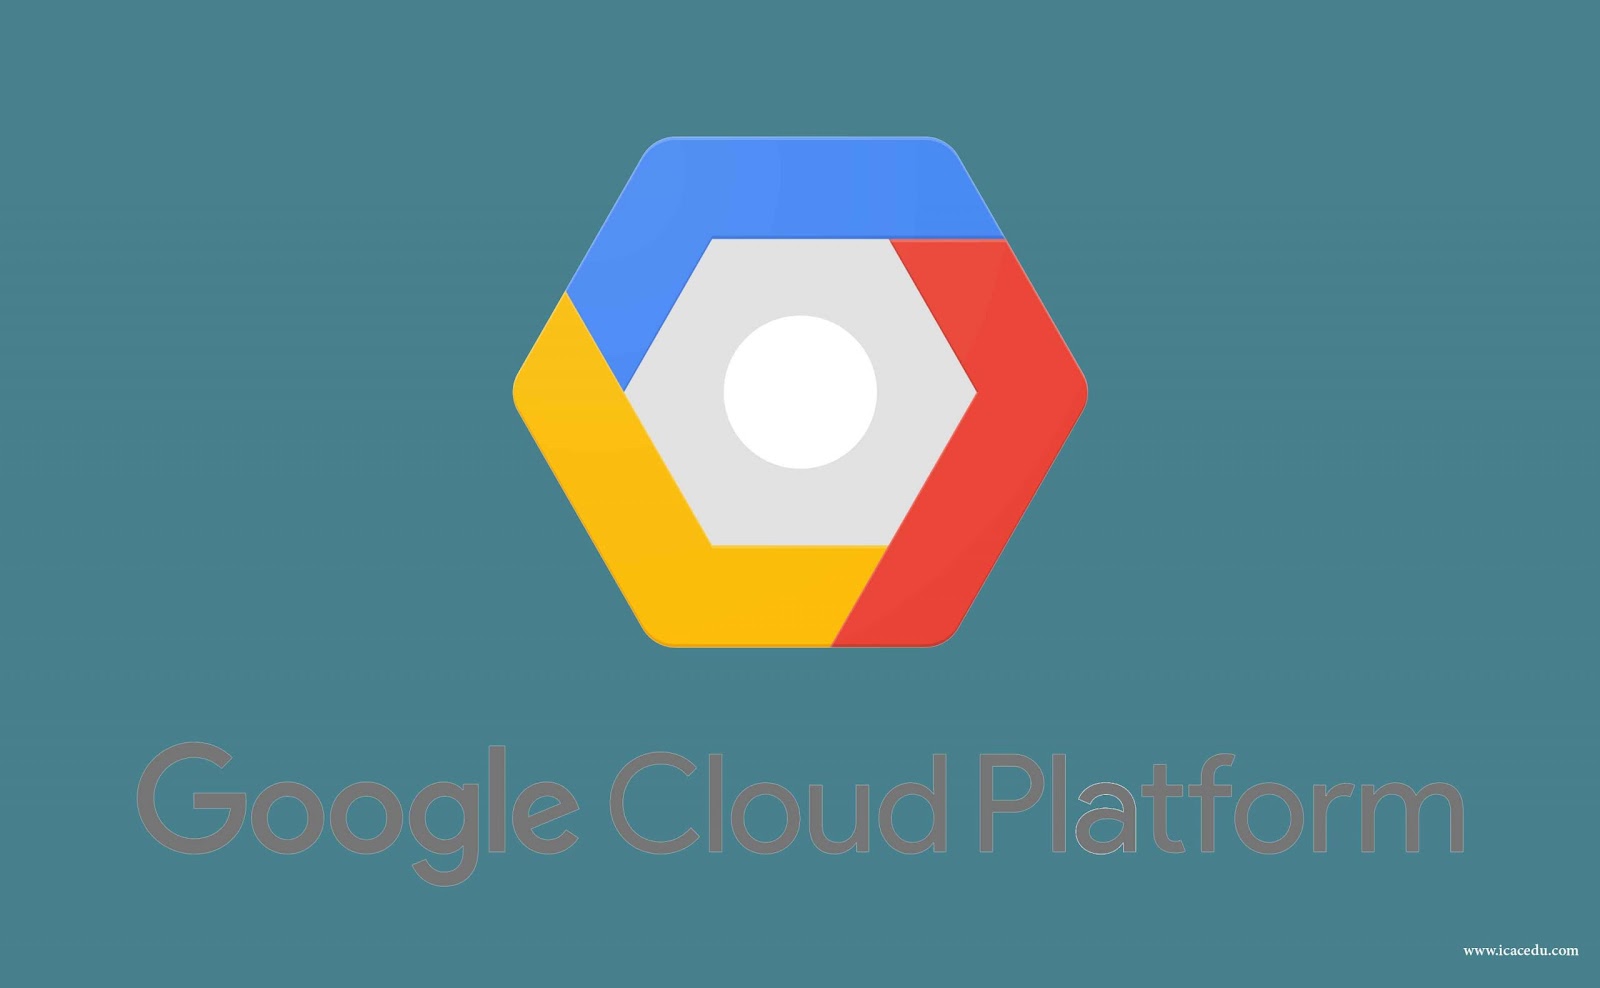 Why You Should Host Your Website on the Google Cloud Platform